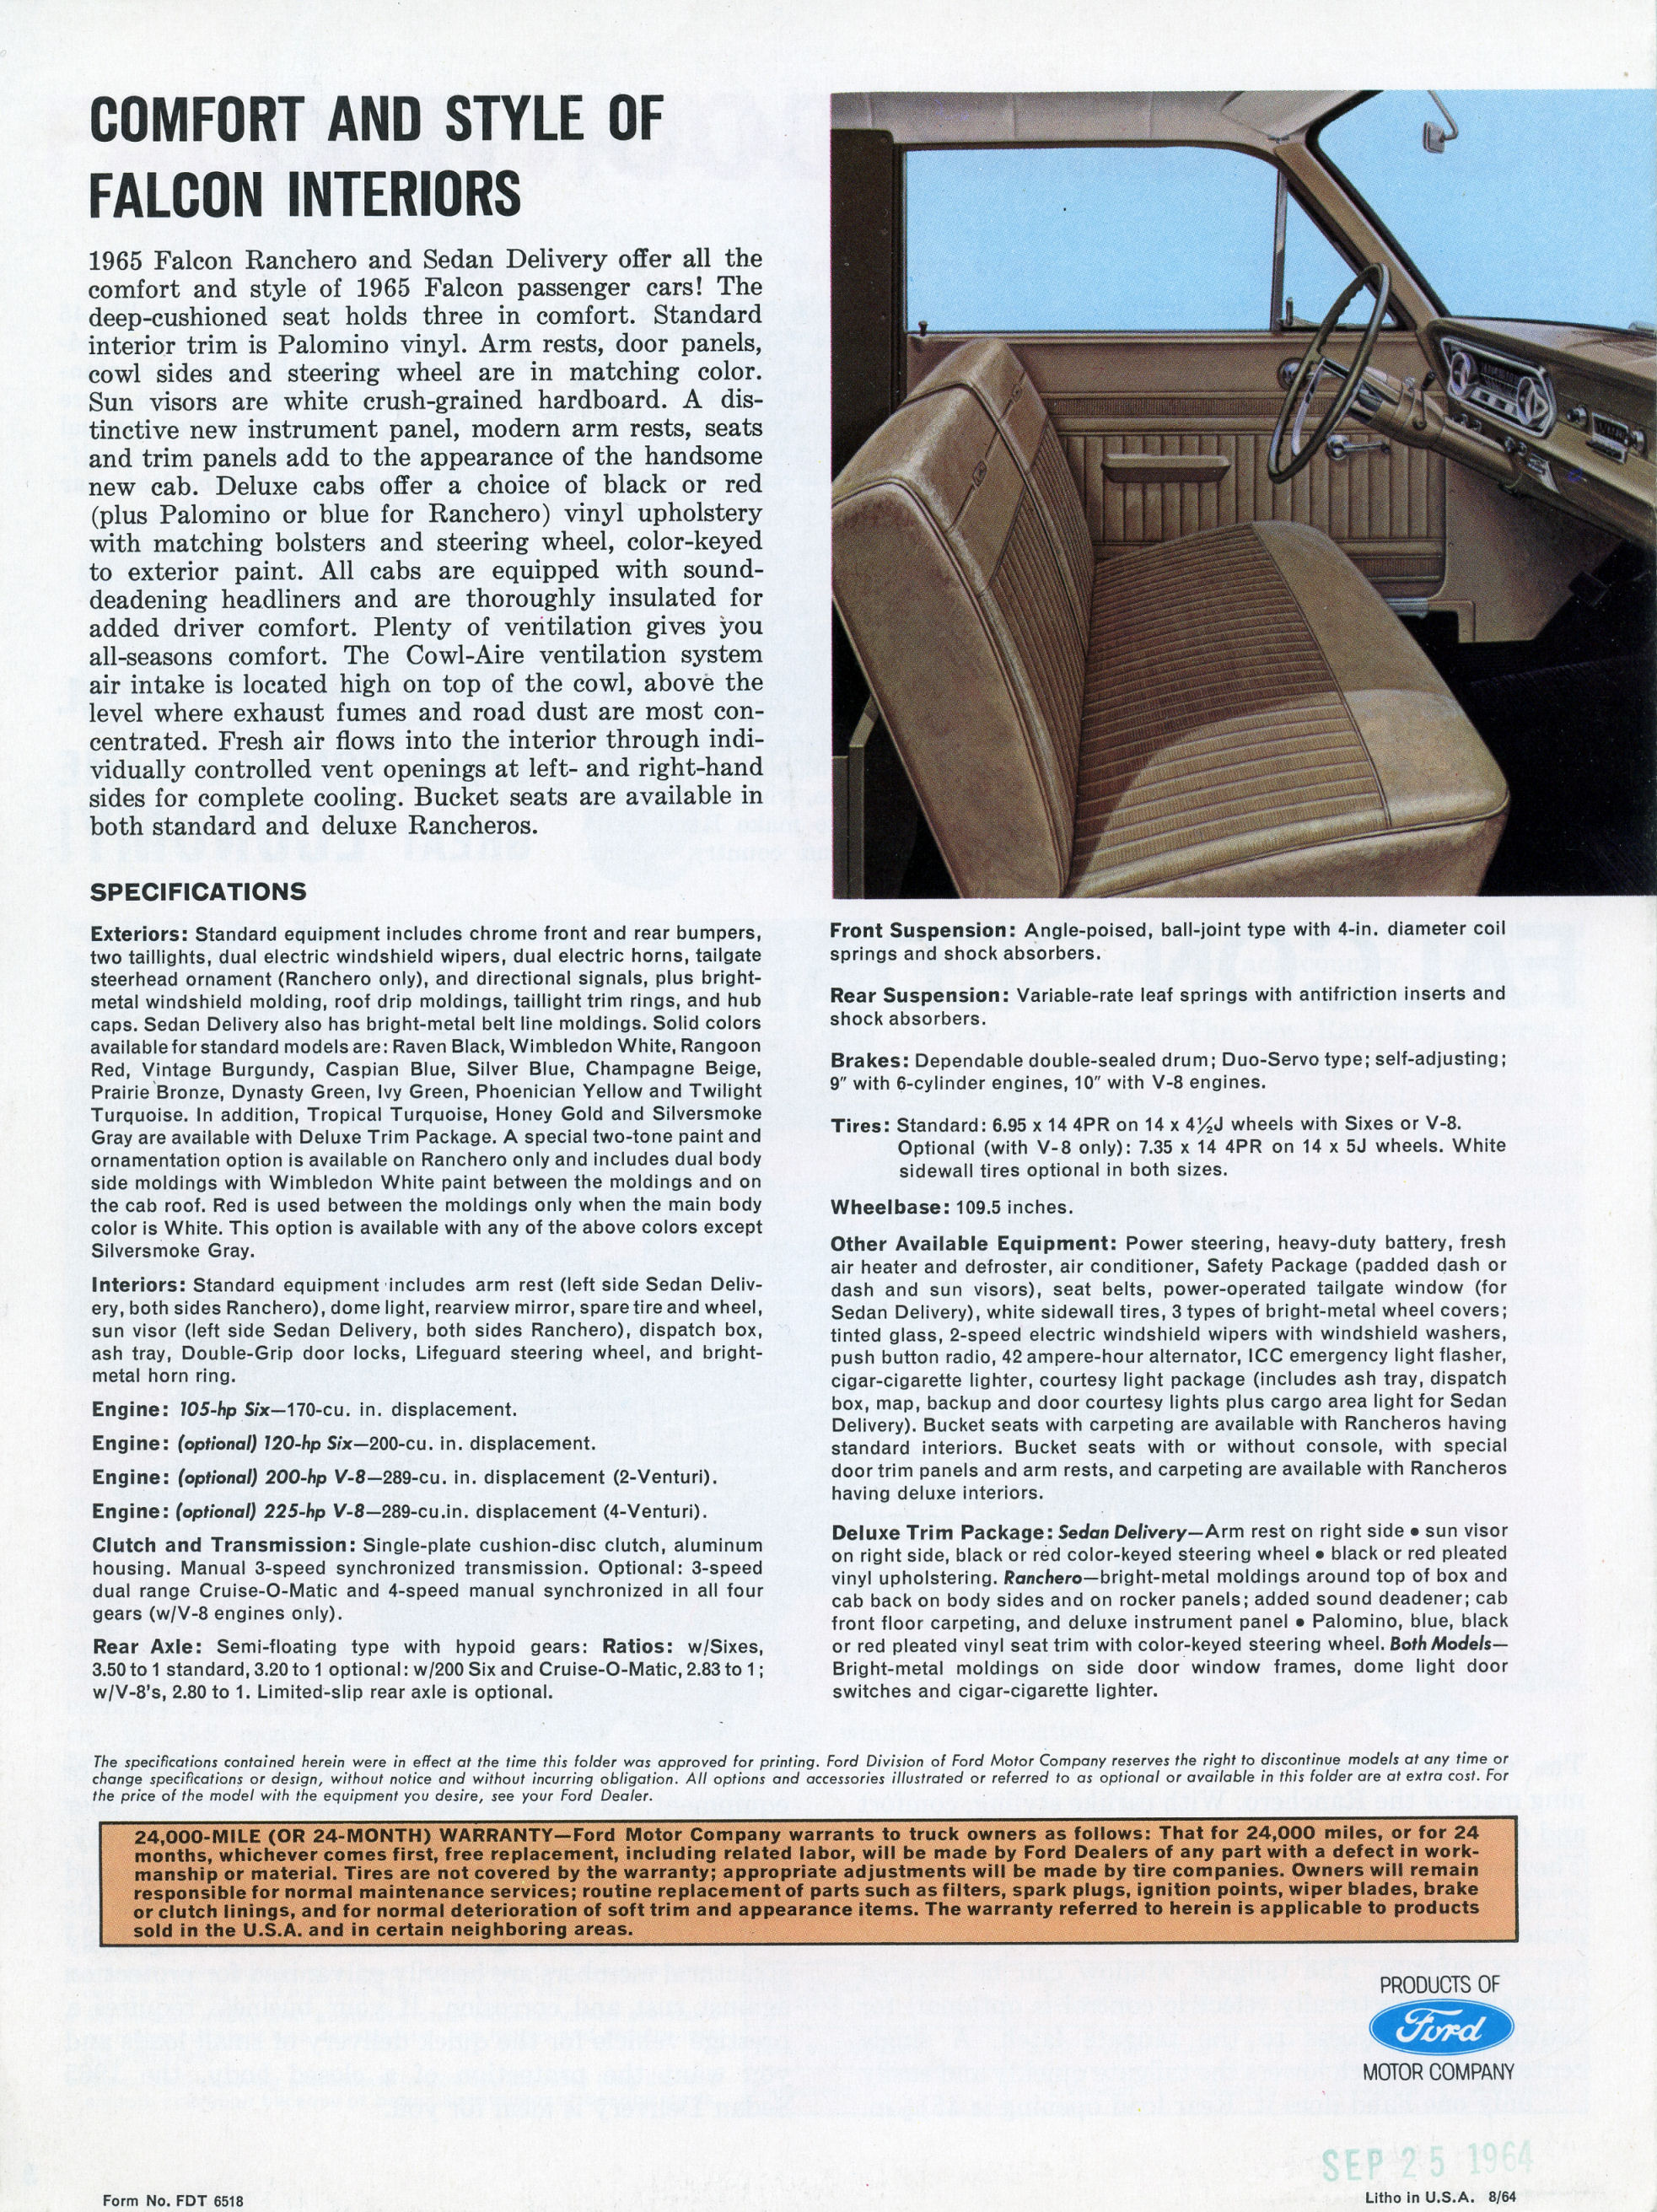 1965 Ford Ranchero Foldout Page 1